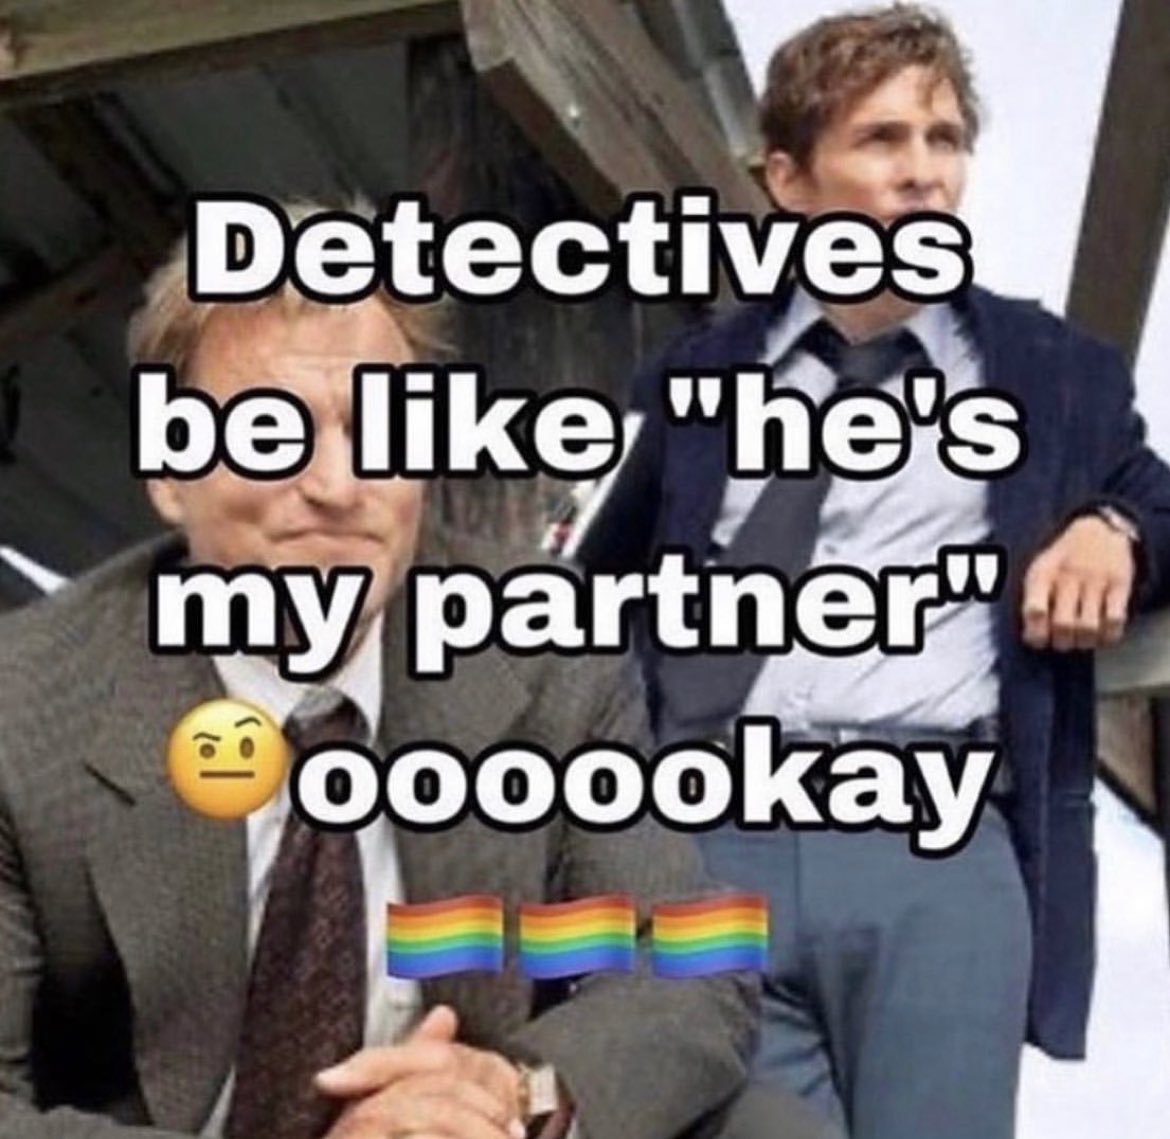 True Detective show memes - cool - Detectives be "he's my partner" oooookay